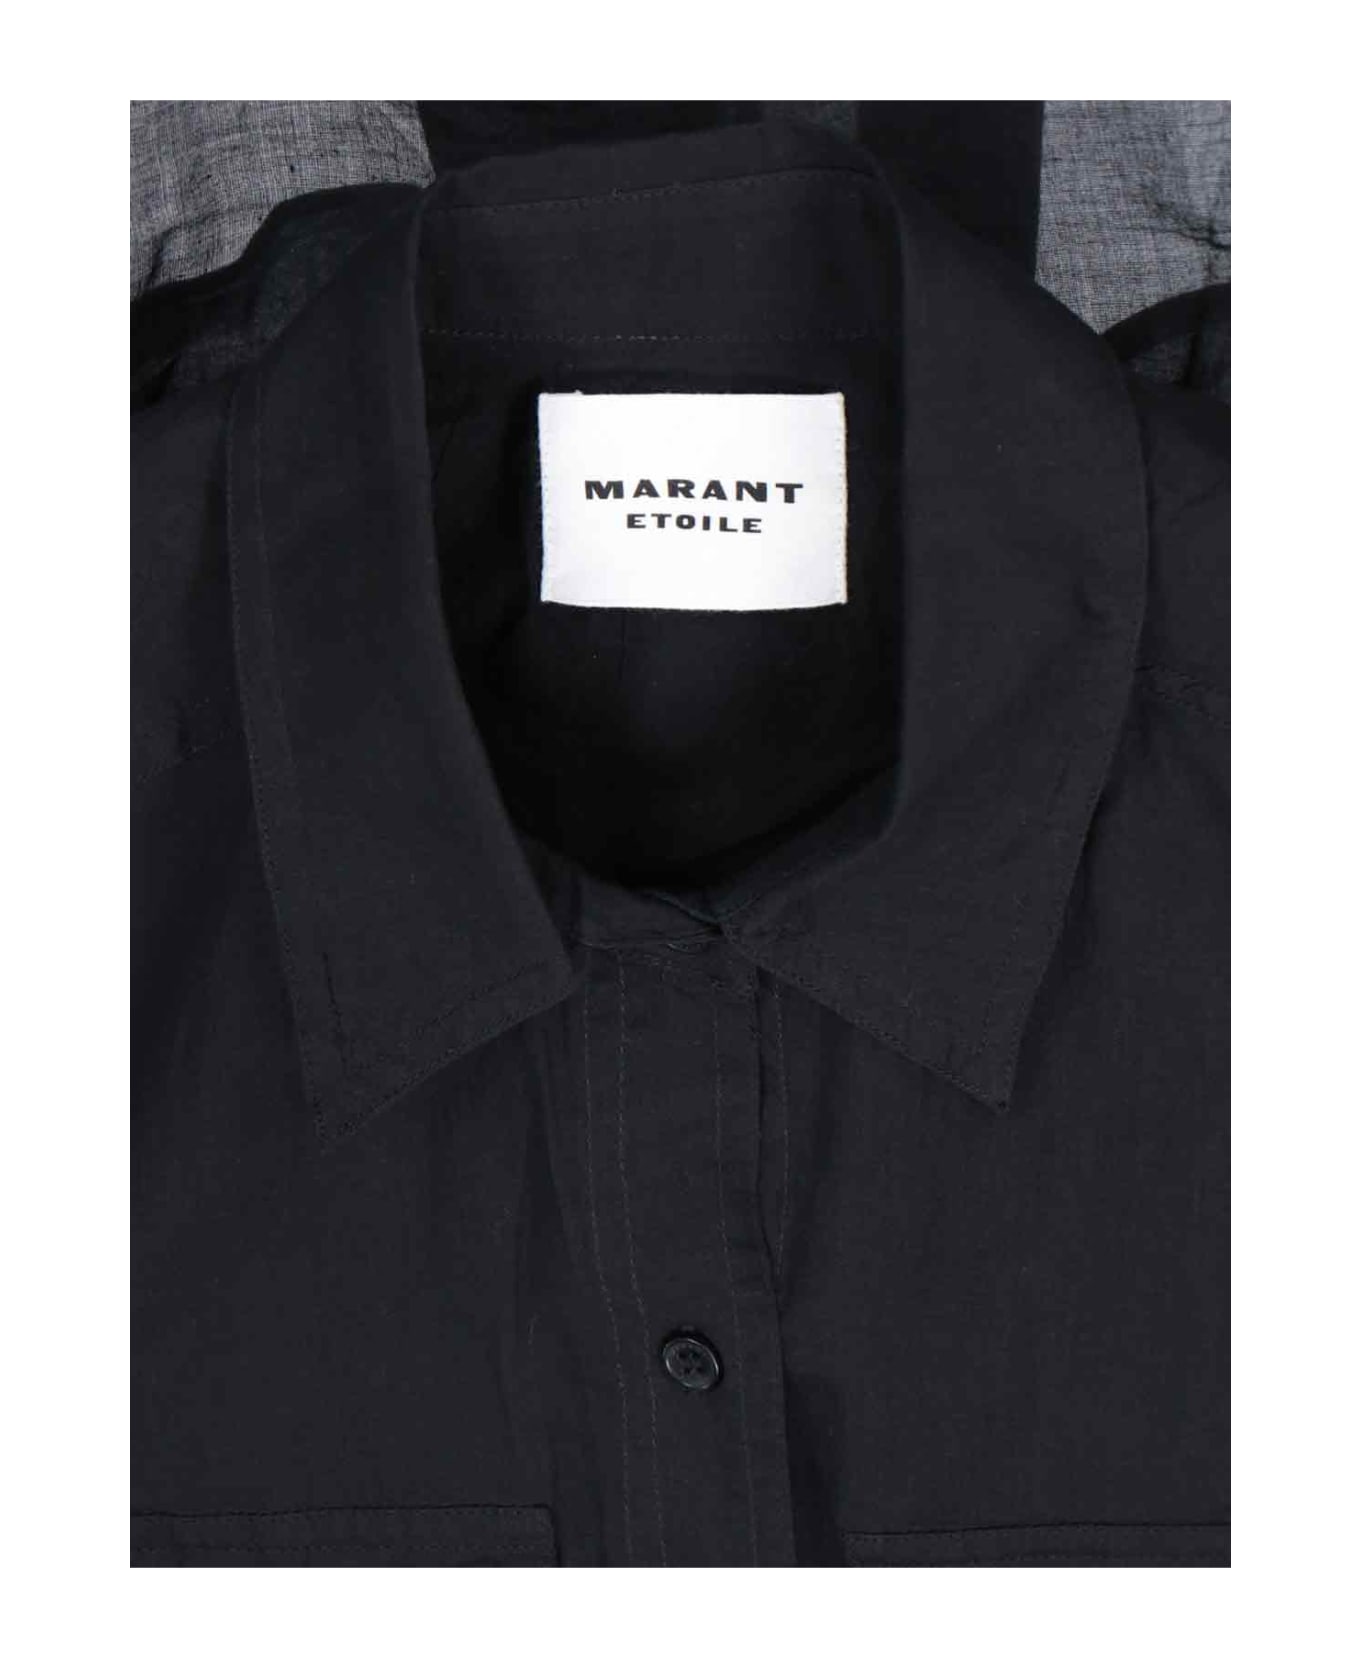 Marant Étoile 'nath' Shirt - Black  